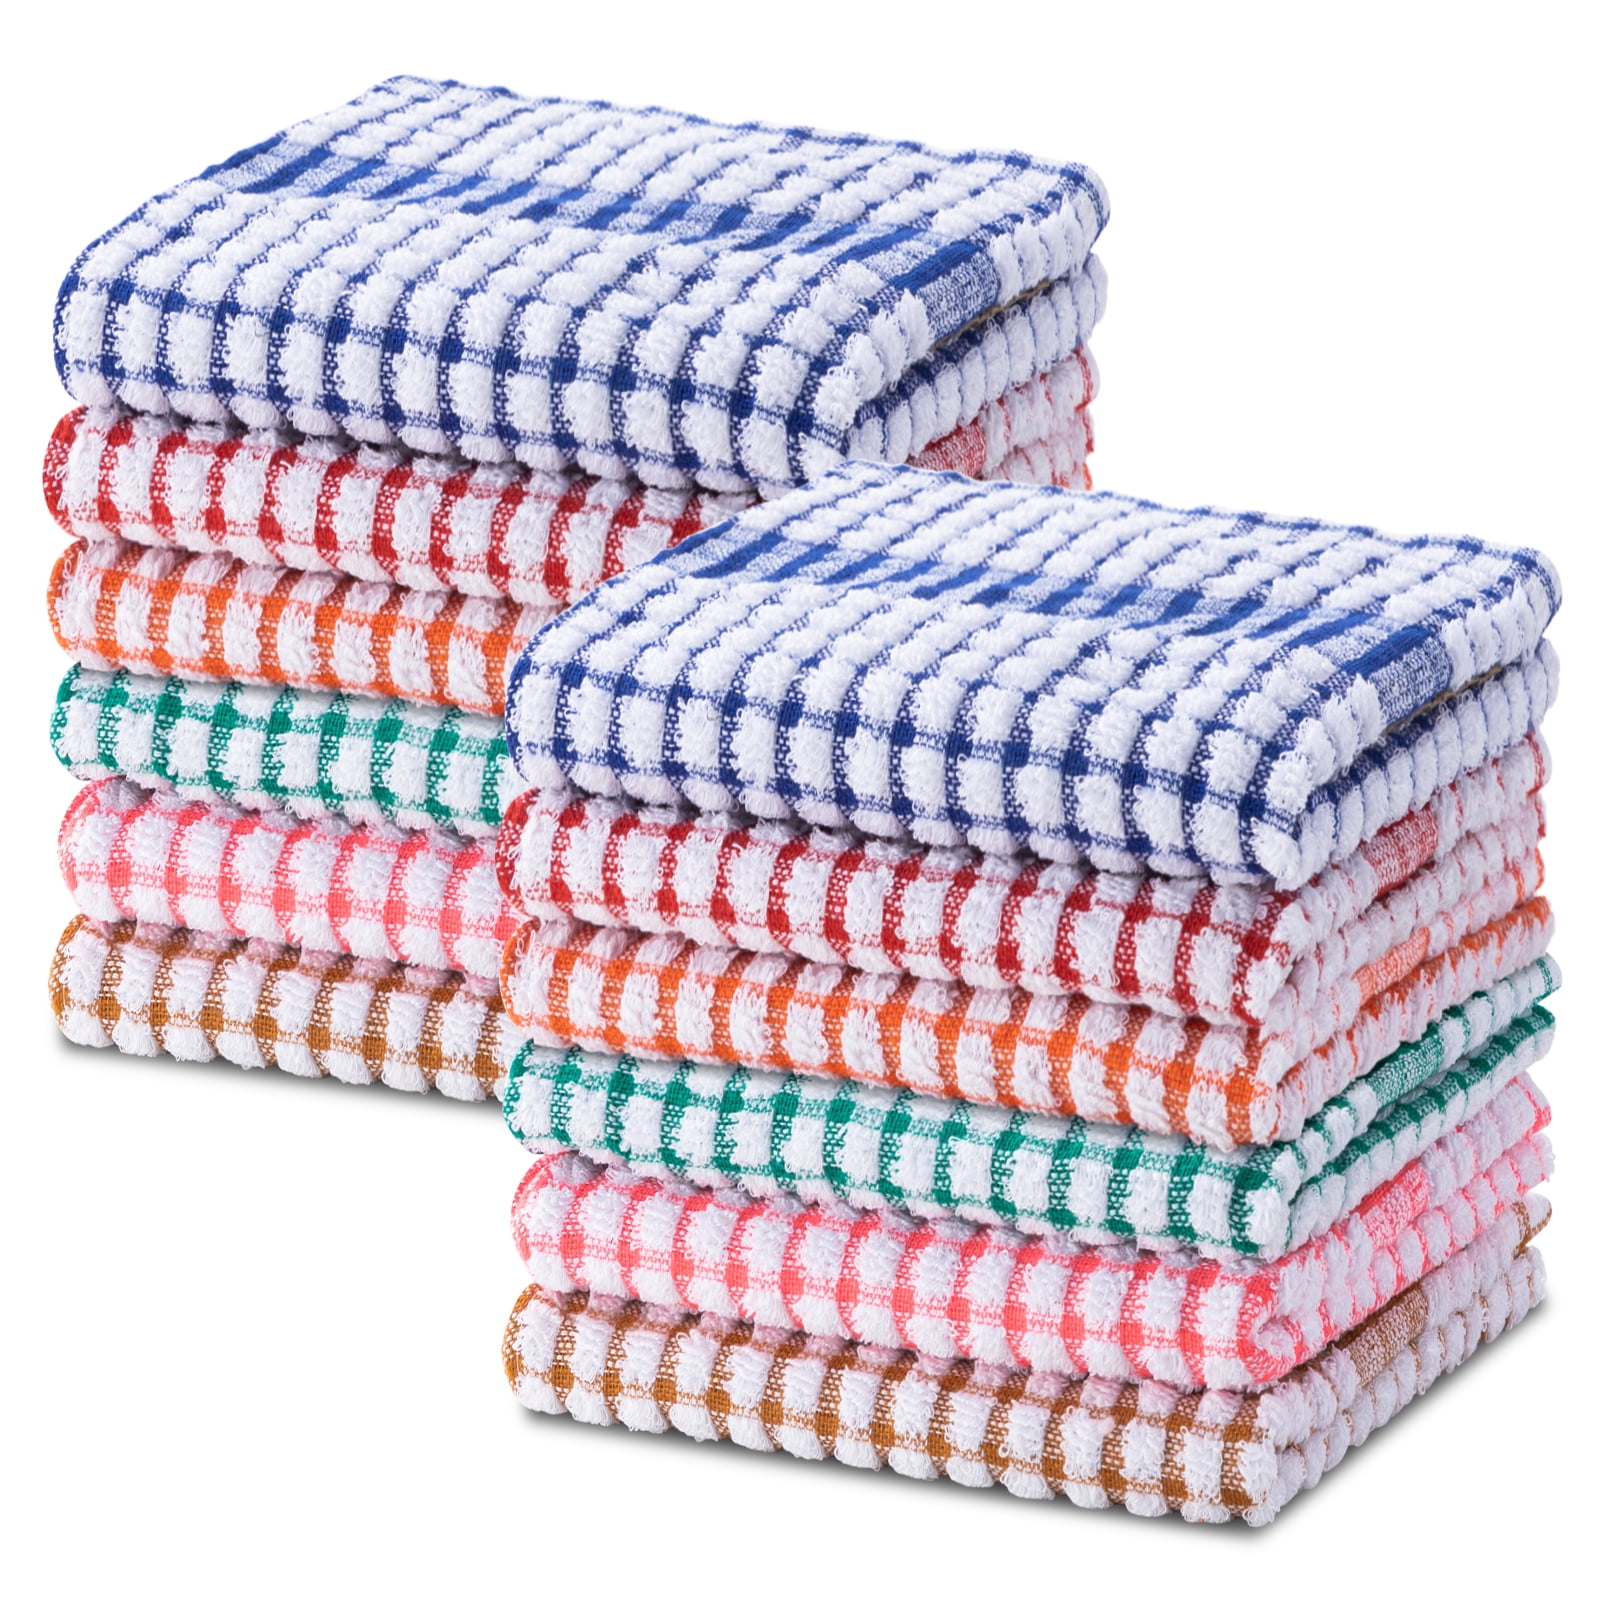 Kitchen Dish Towels, 16 Inch x 25 Inch Bulk Cotton Dishcloths Set, 12 Pack